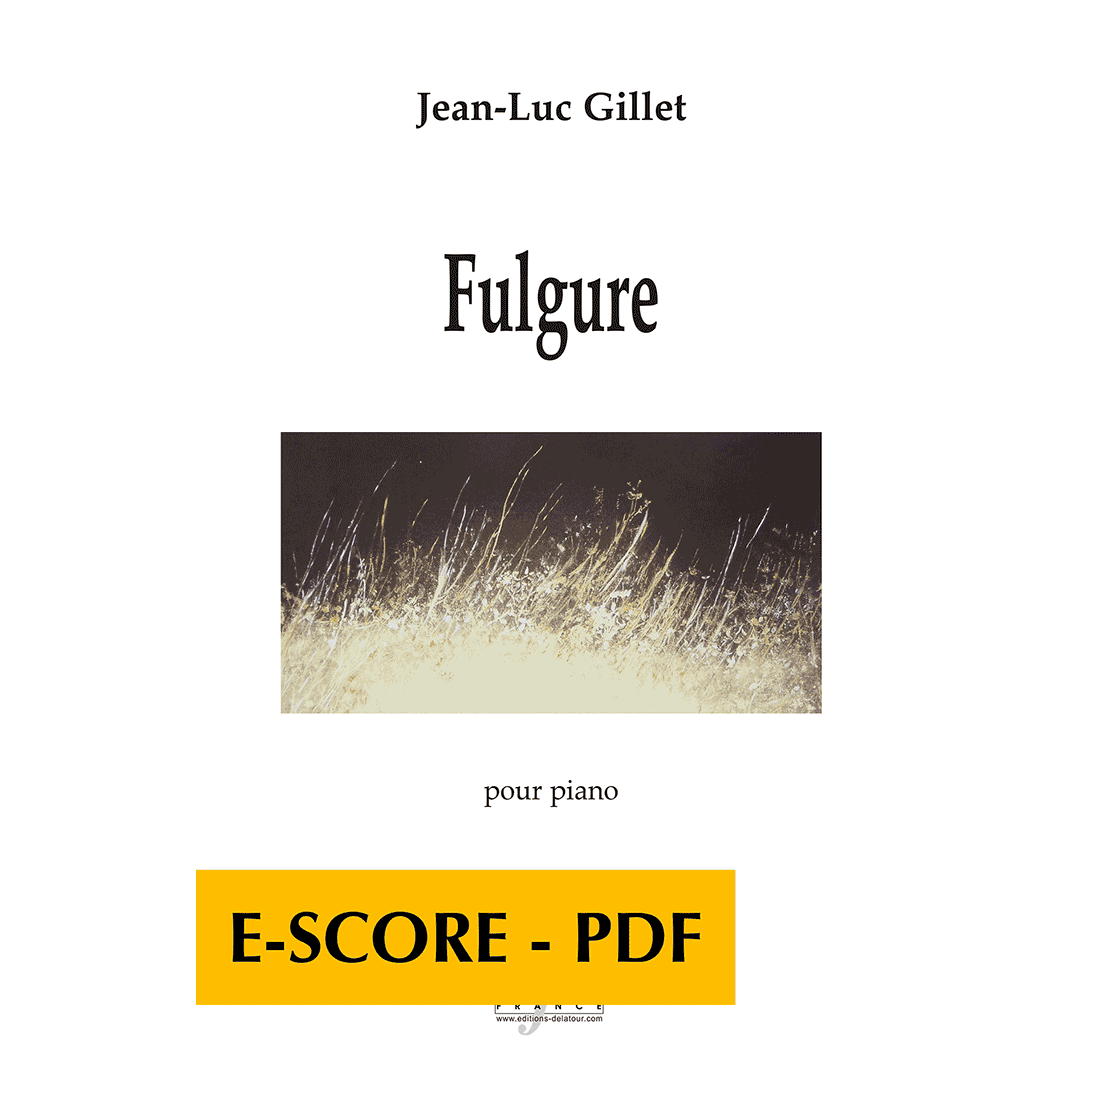 Fulgure for piano - E-score PDF